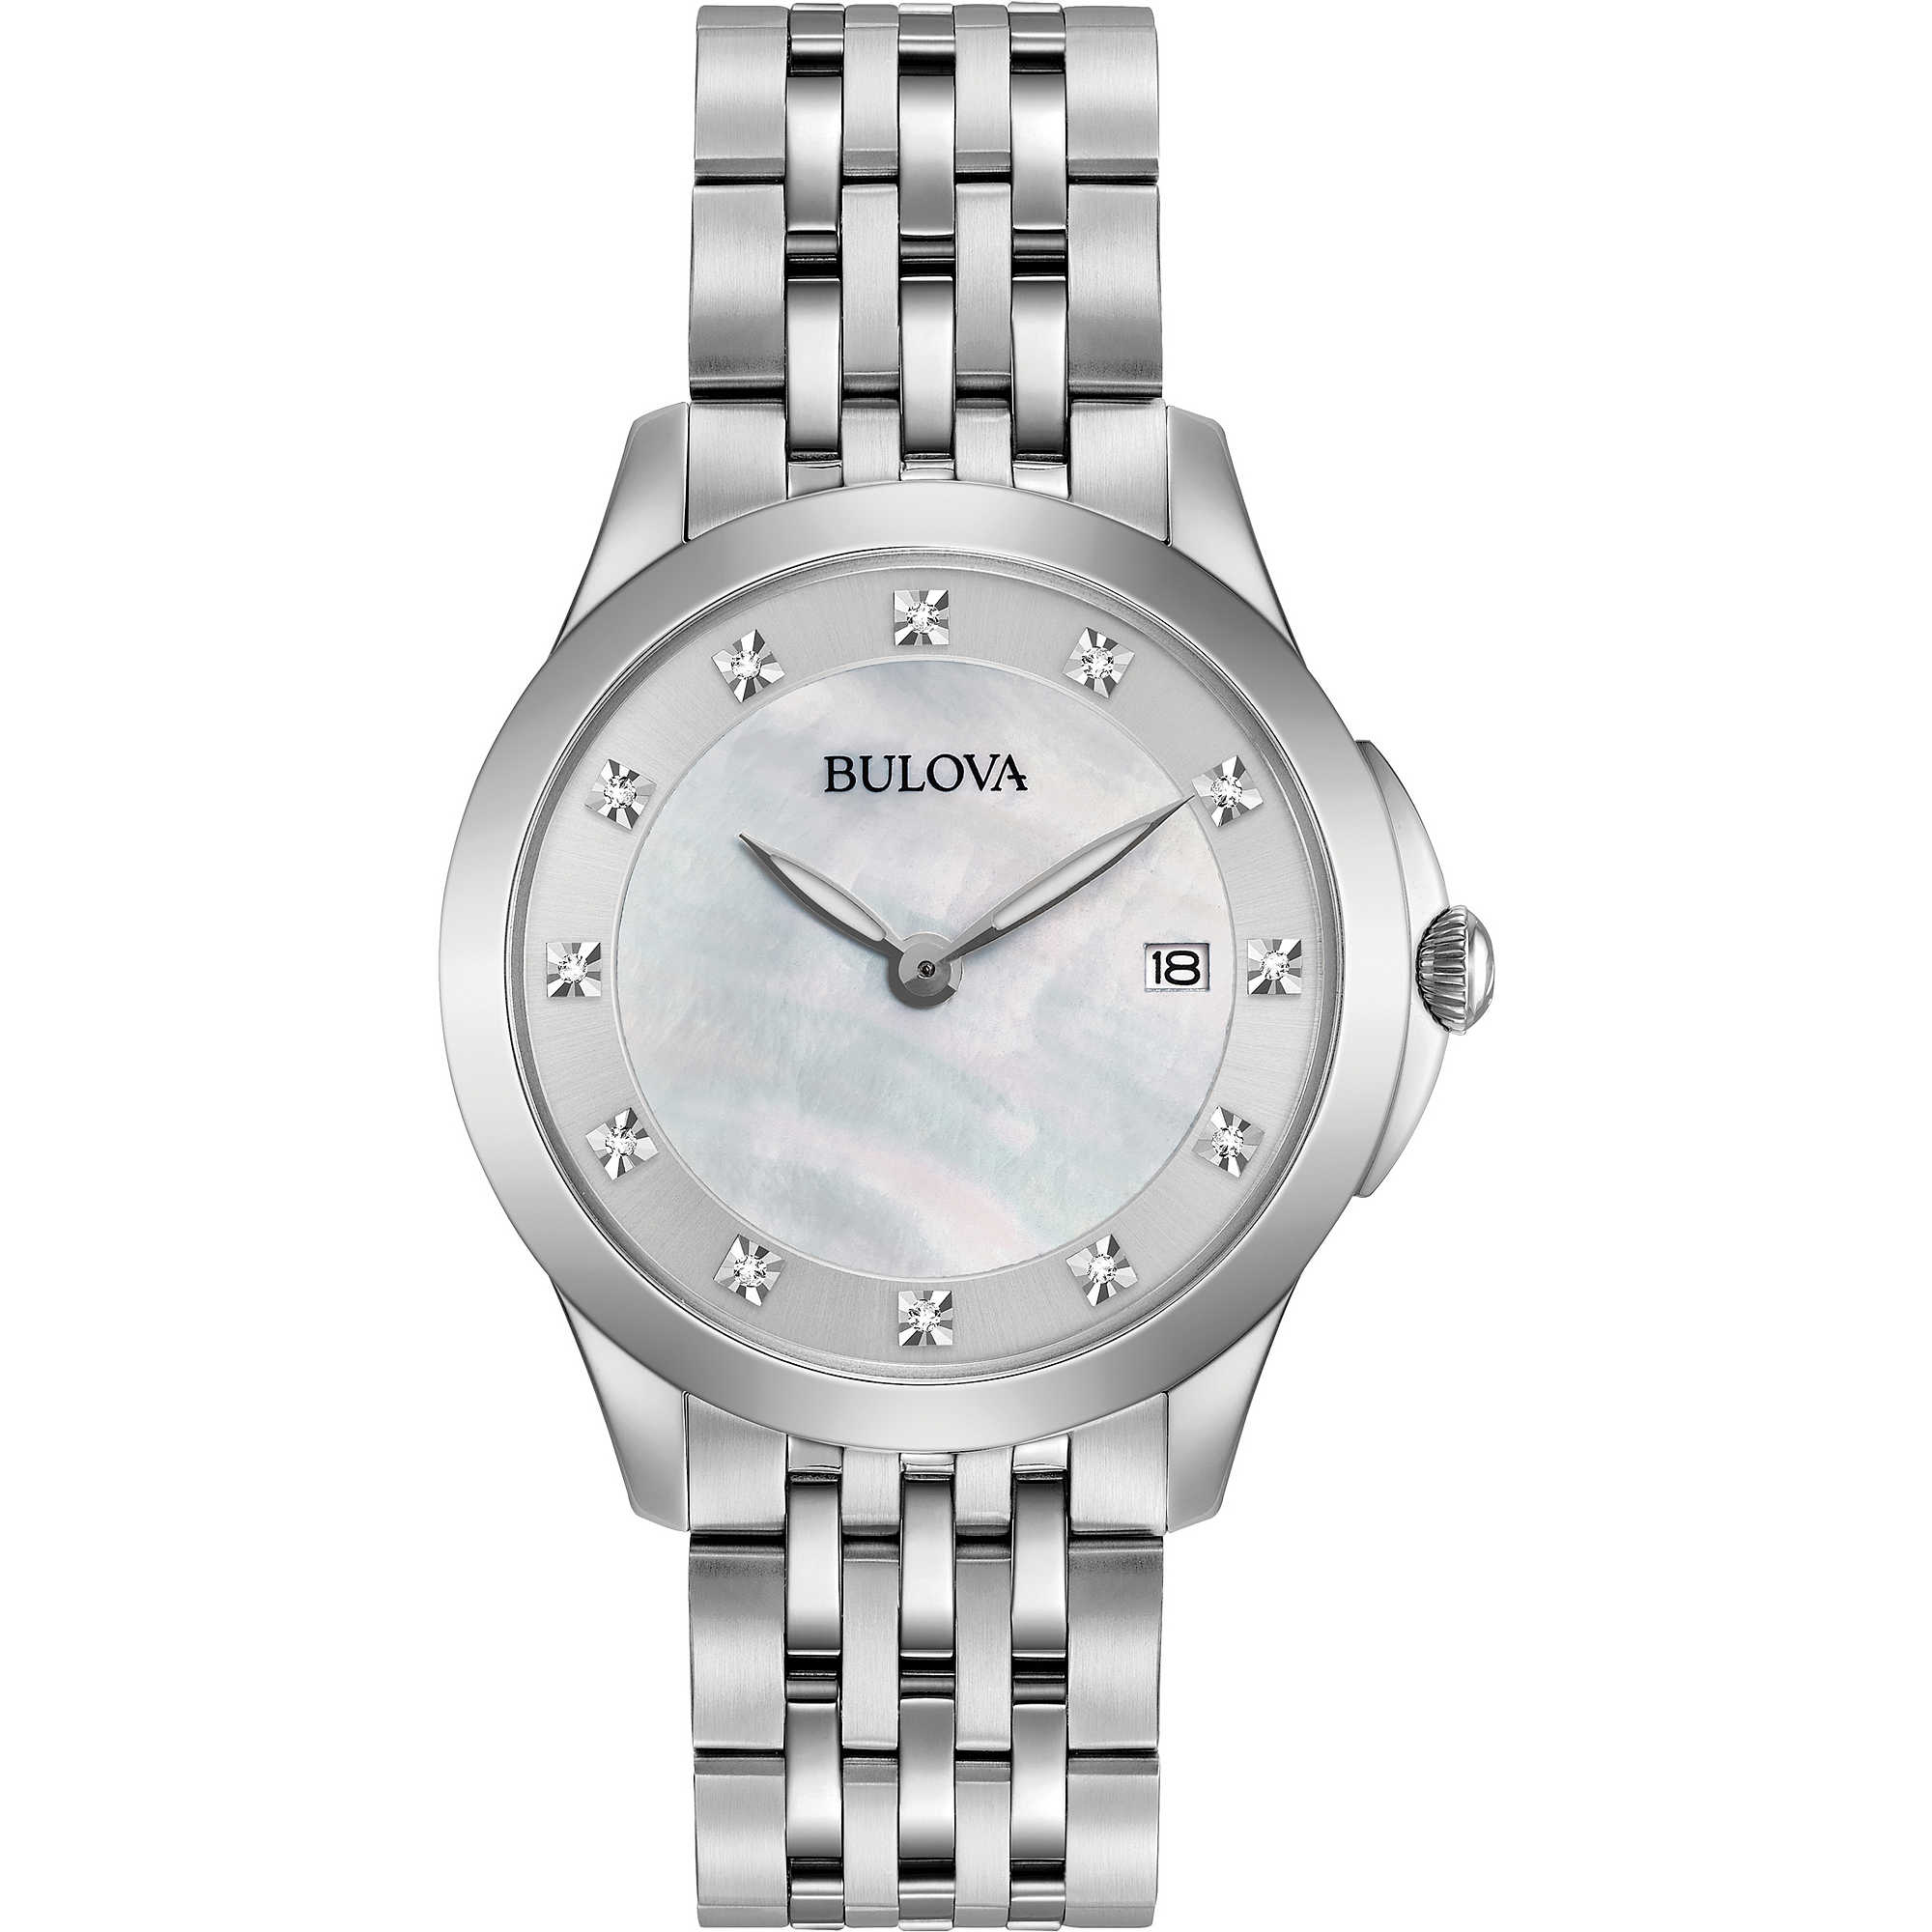 BULOVA Women's Time-Only Watch Bulova Diamonds